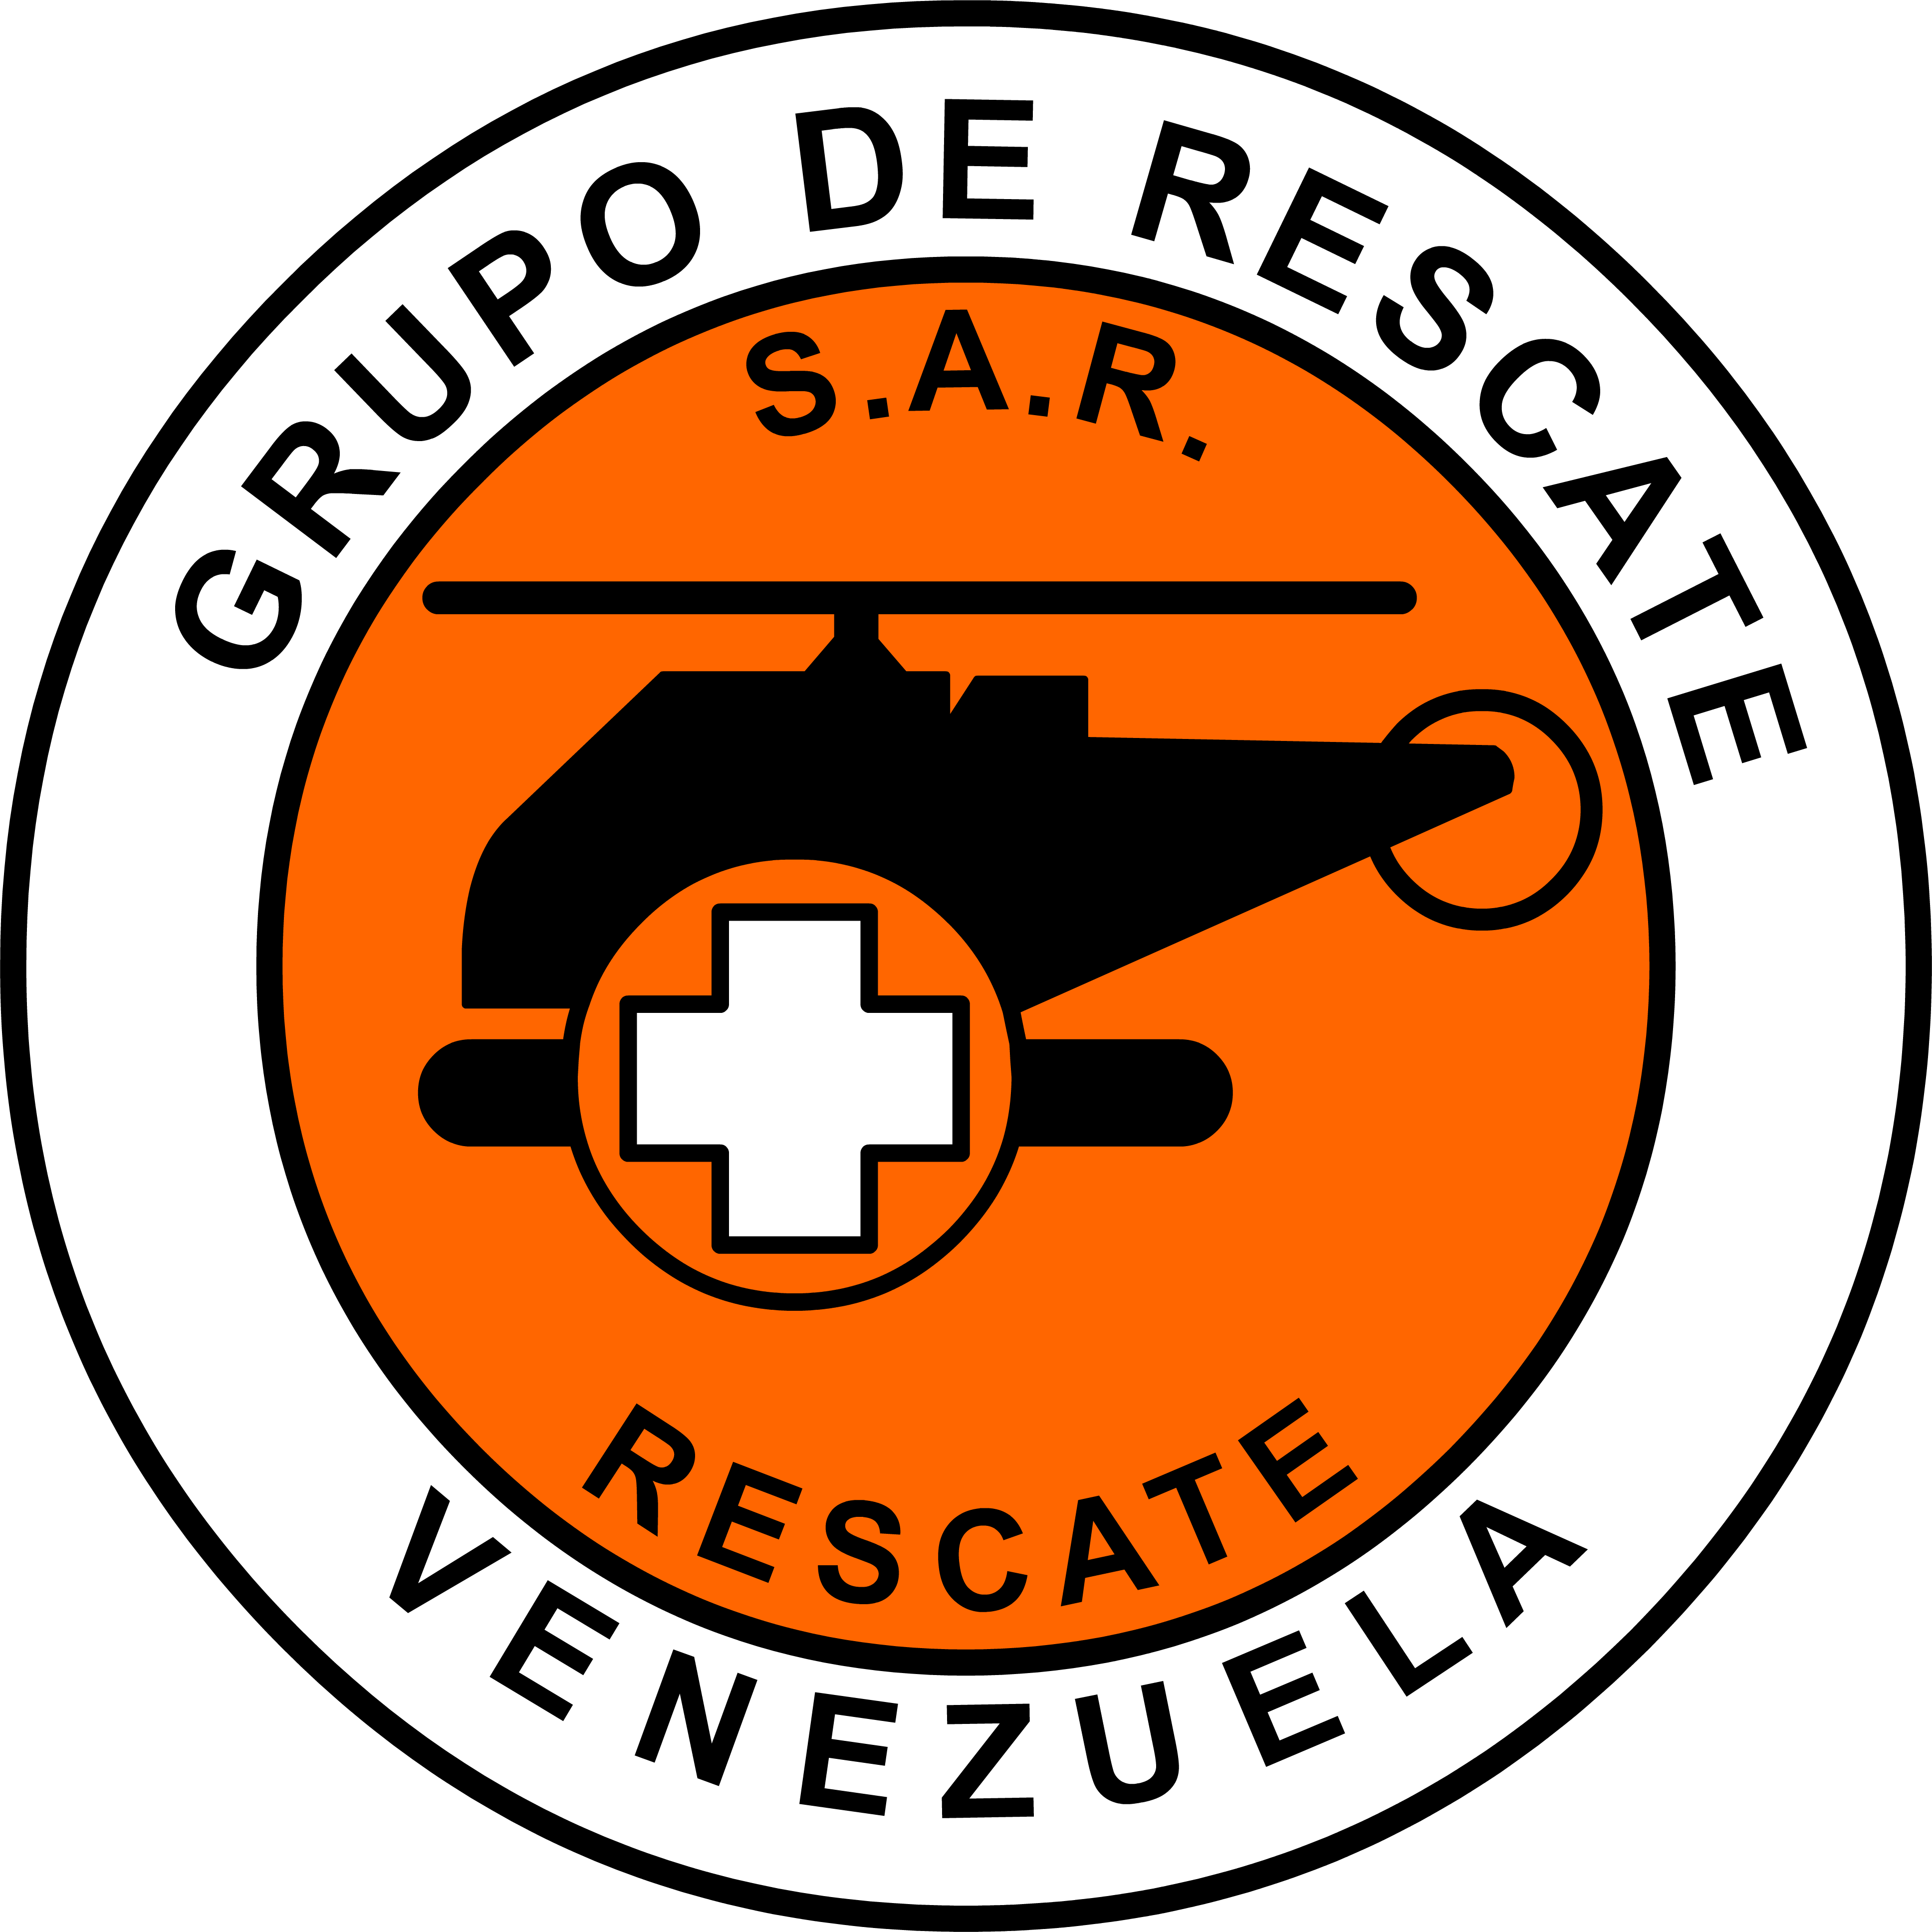 Logo - Grupo De Rescate Venezuela (3872x3872)